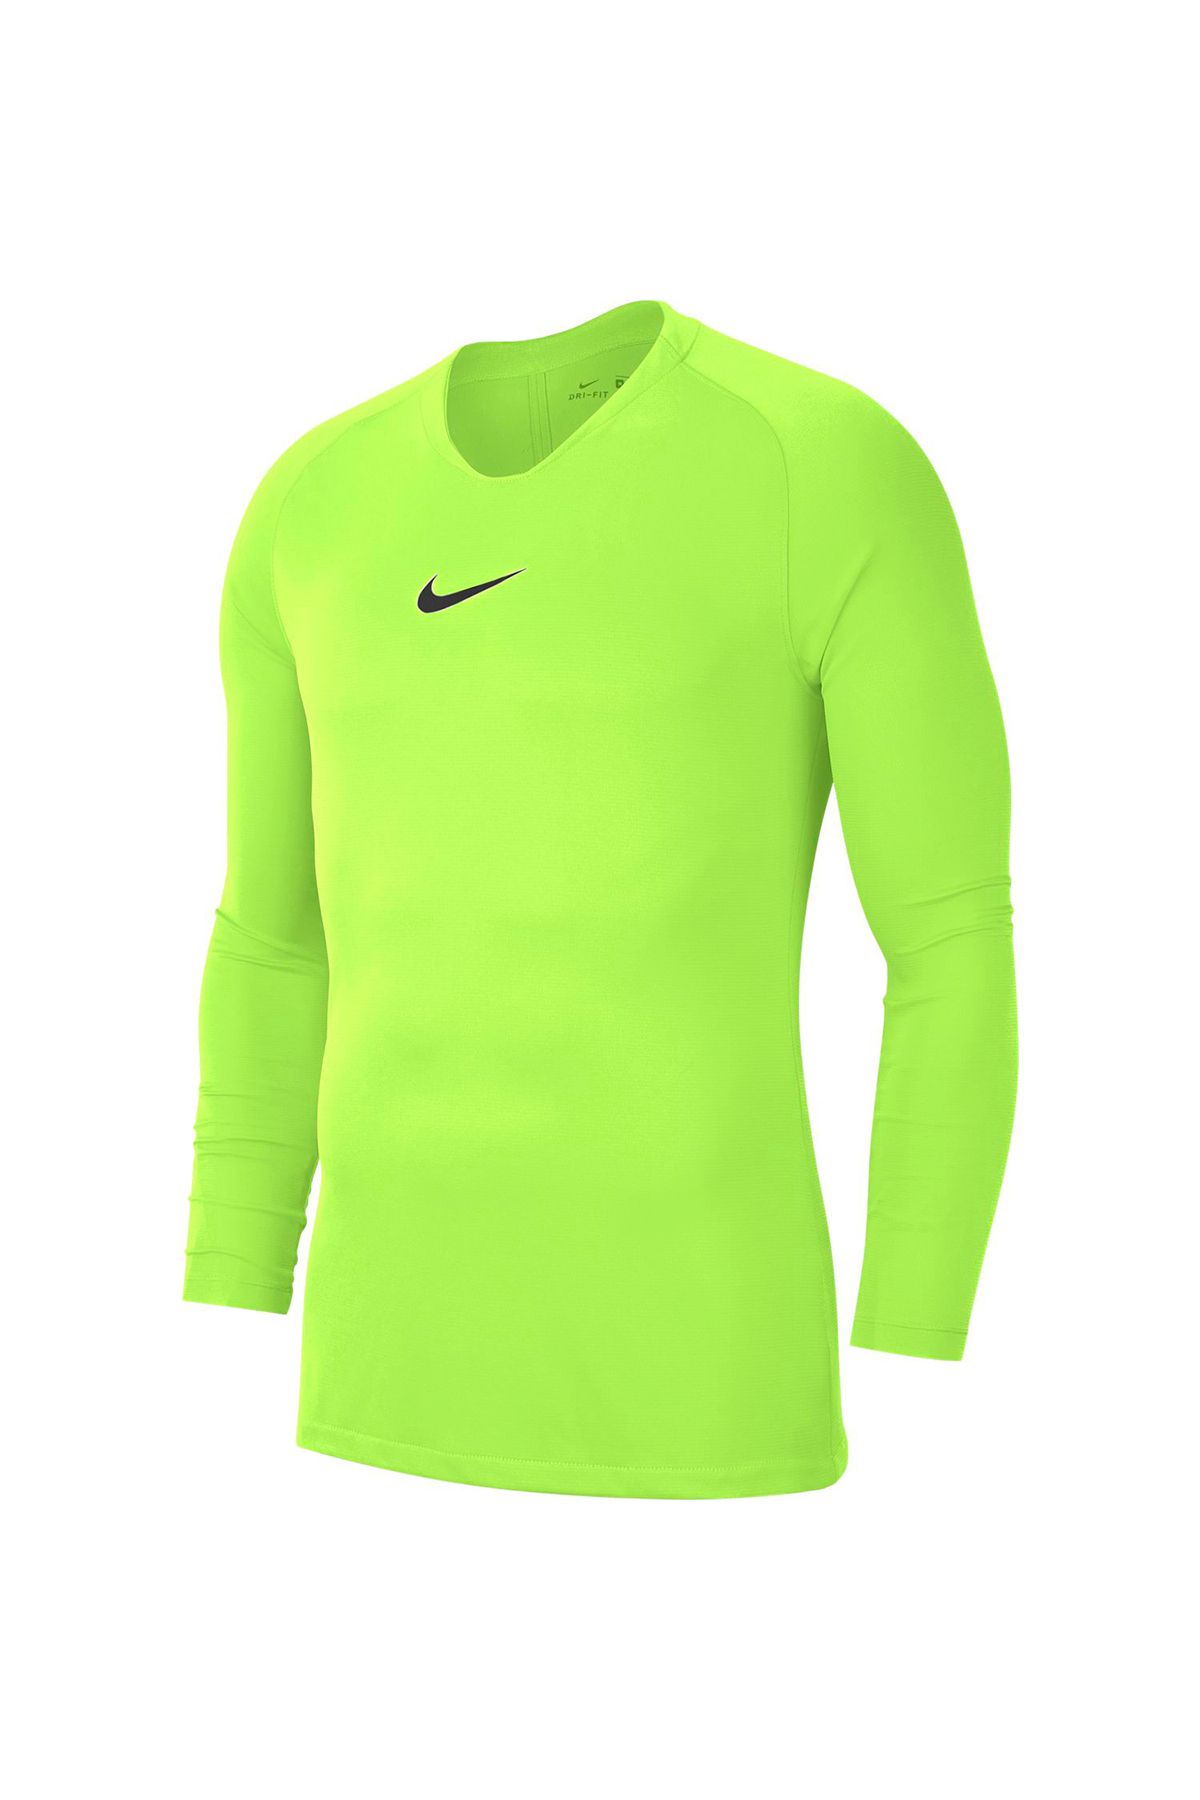 Nike Erkek Yeşil Forma Av2609-702-702